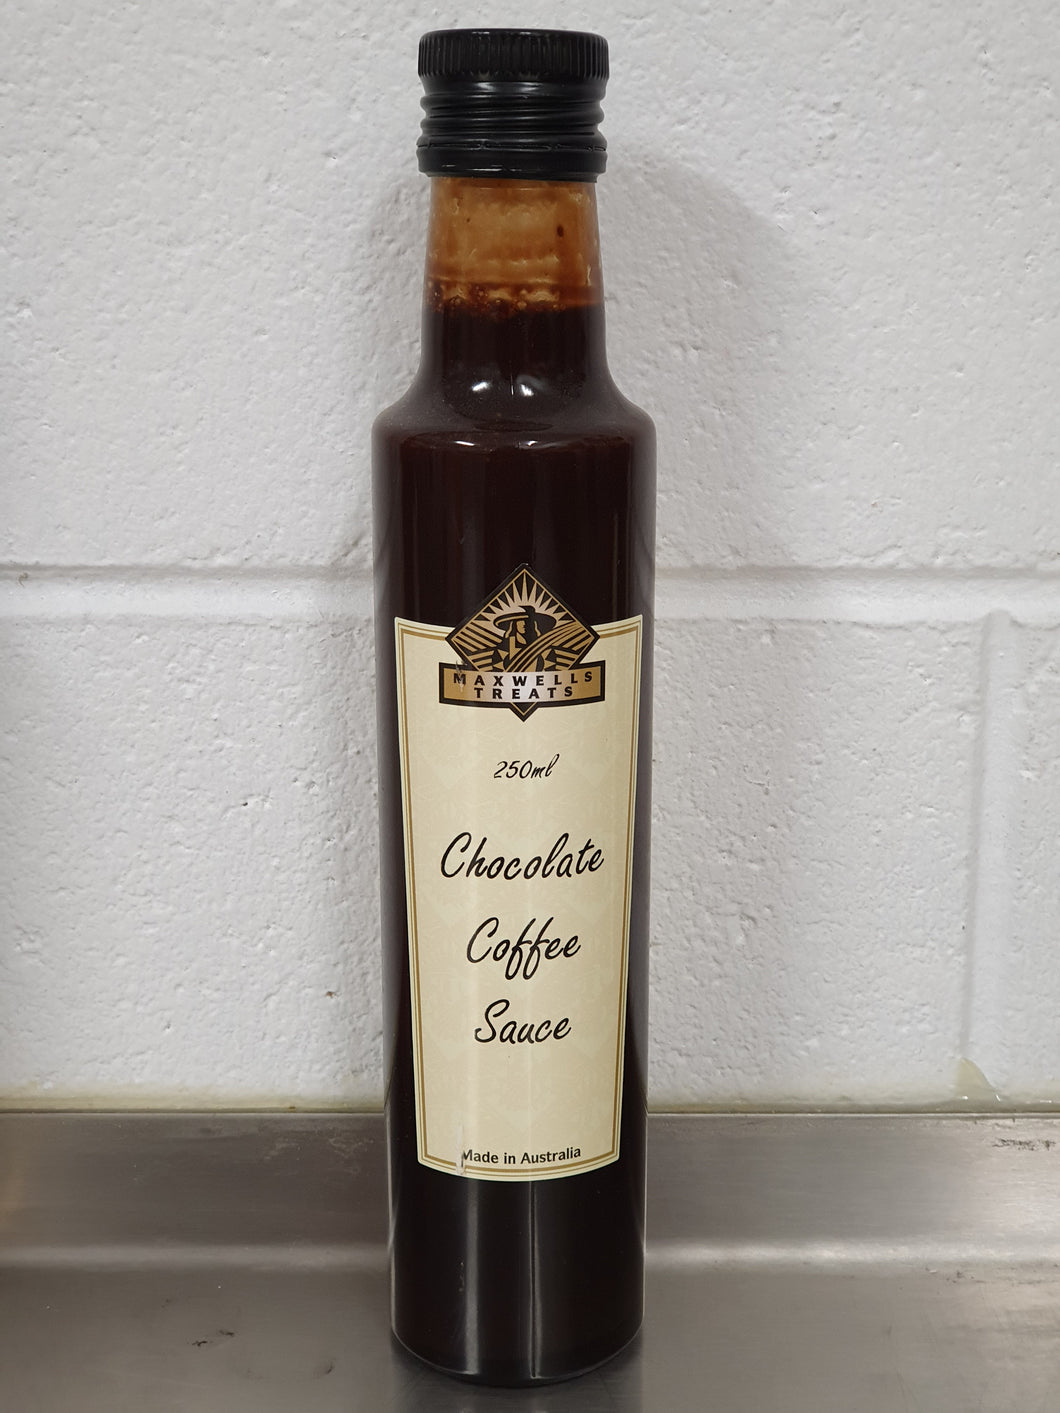 Chocolate Coffee Sauce, Maxwell Treats 250ml